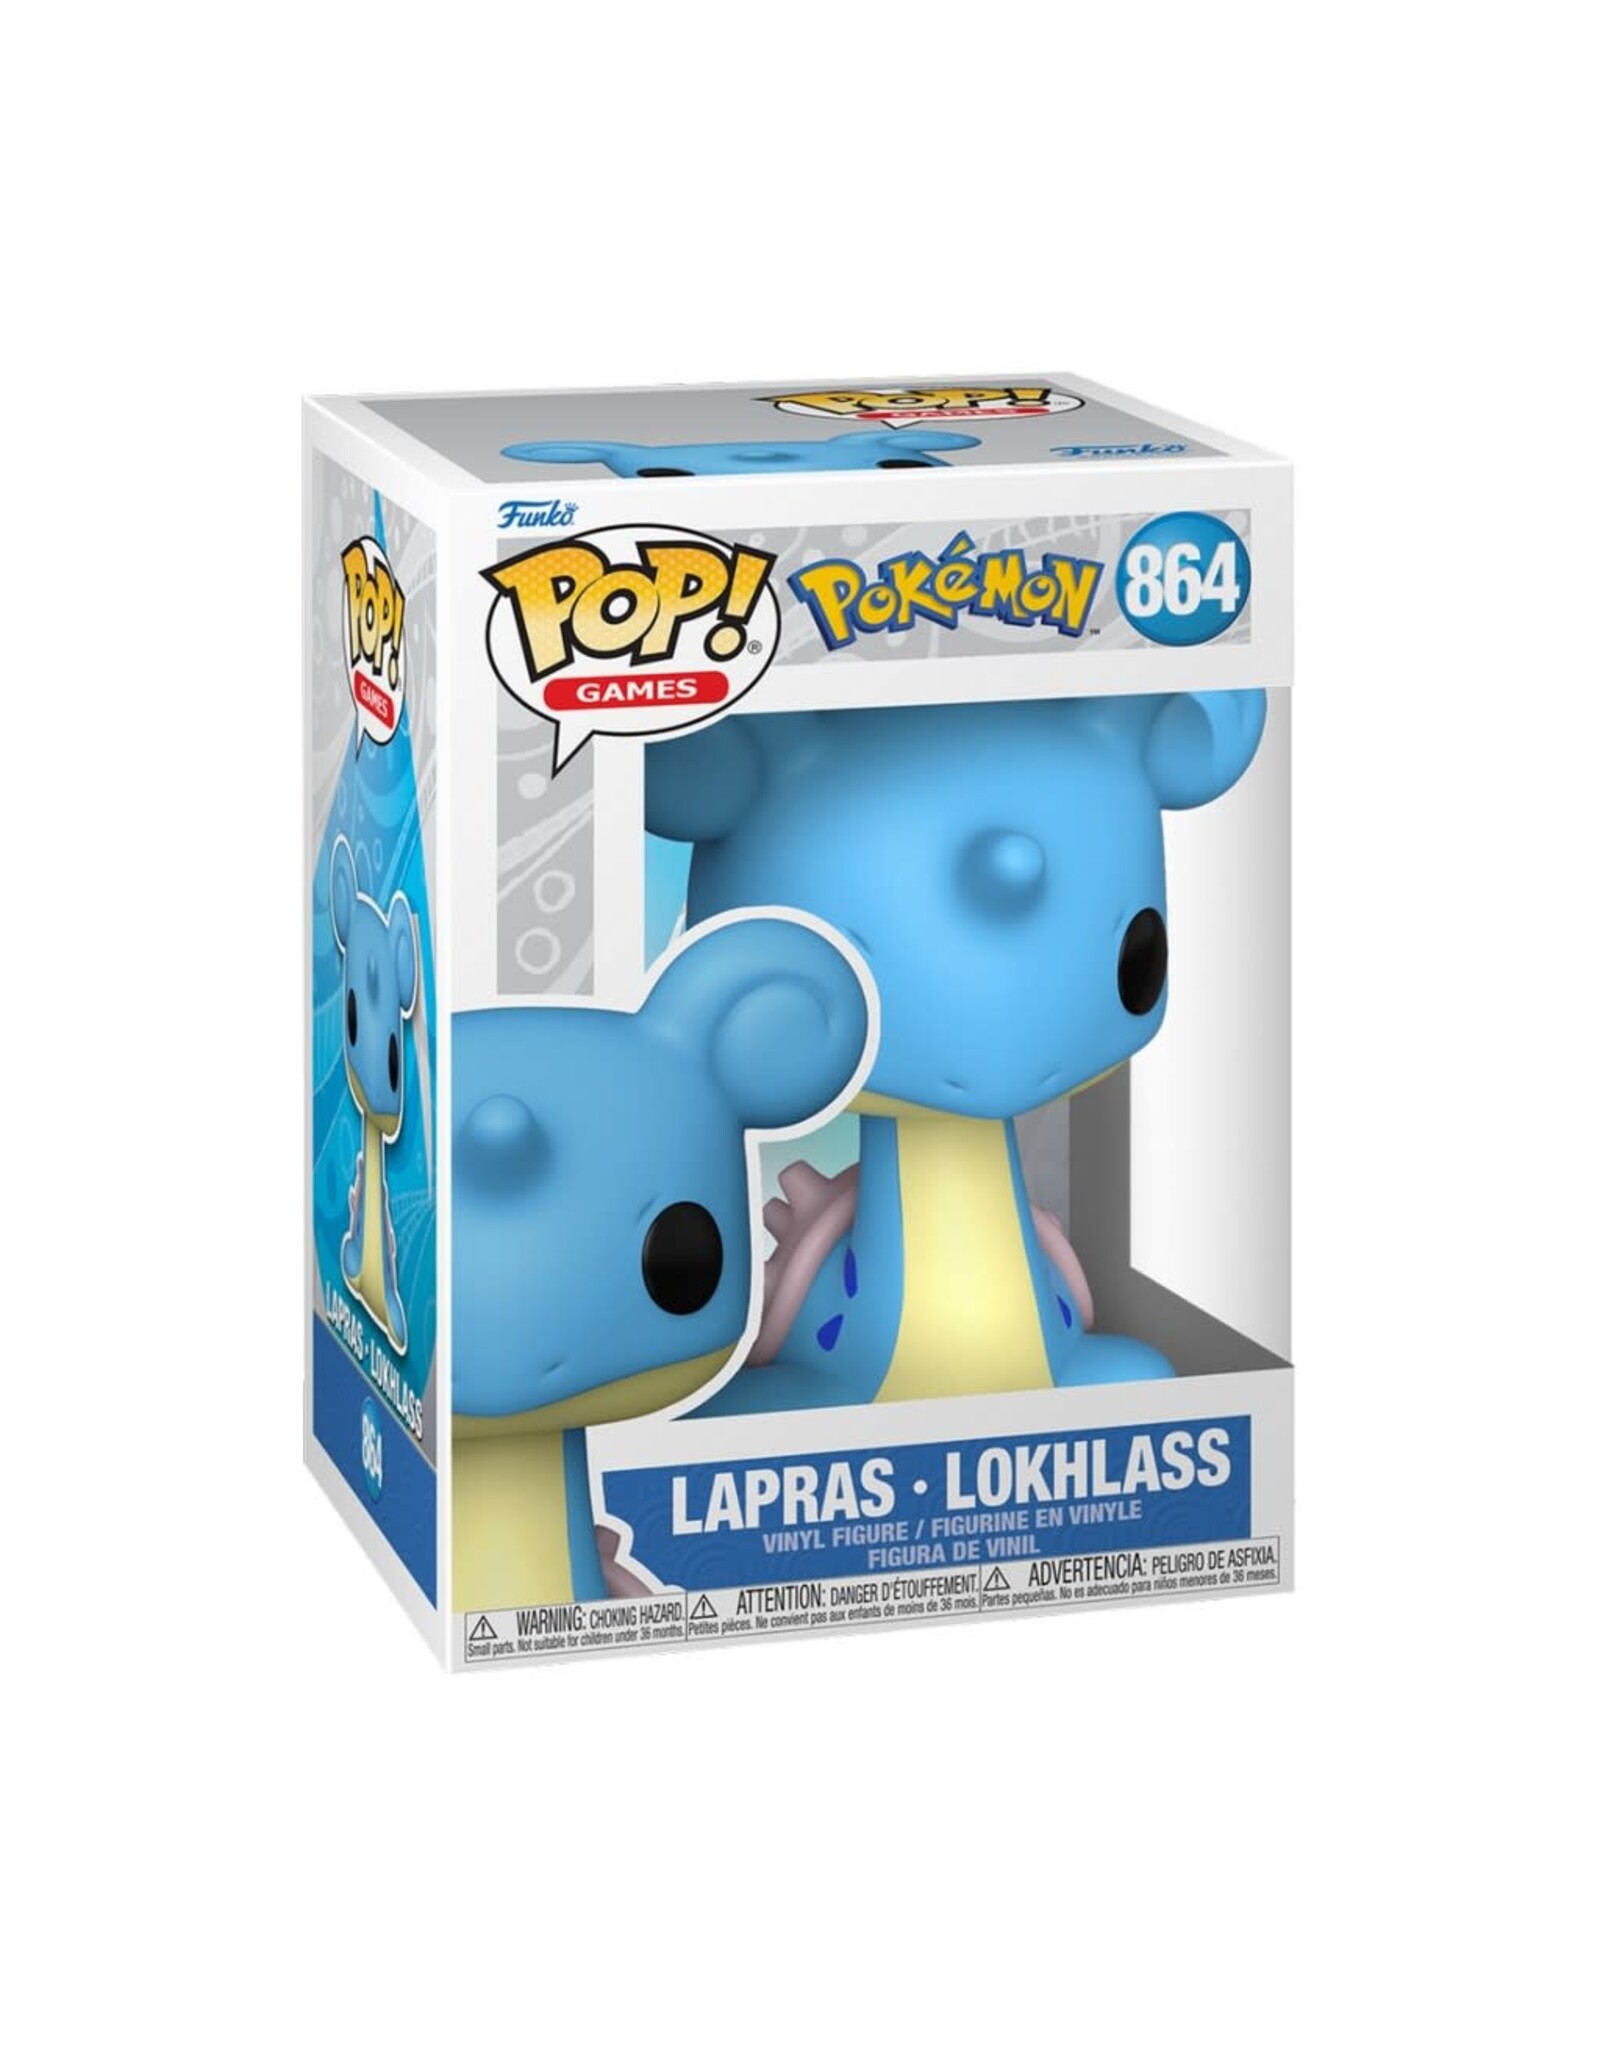 Funko Pop! Funko Pop! Games nr864 Pokémon - Lapras